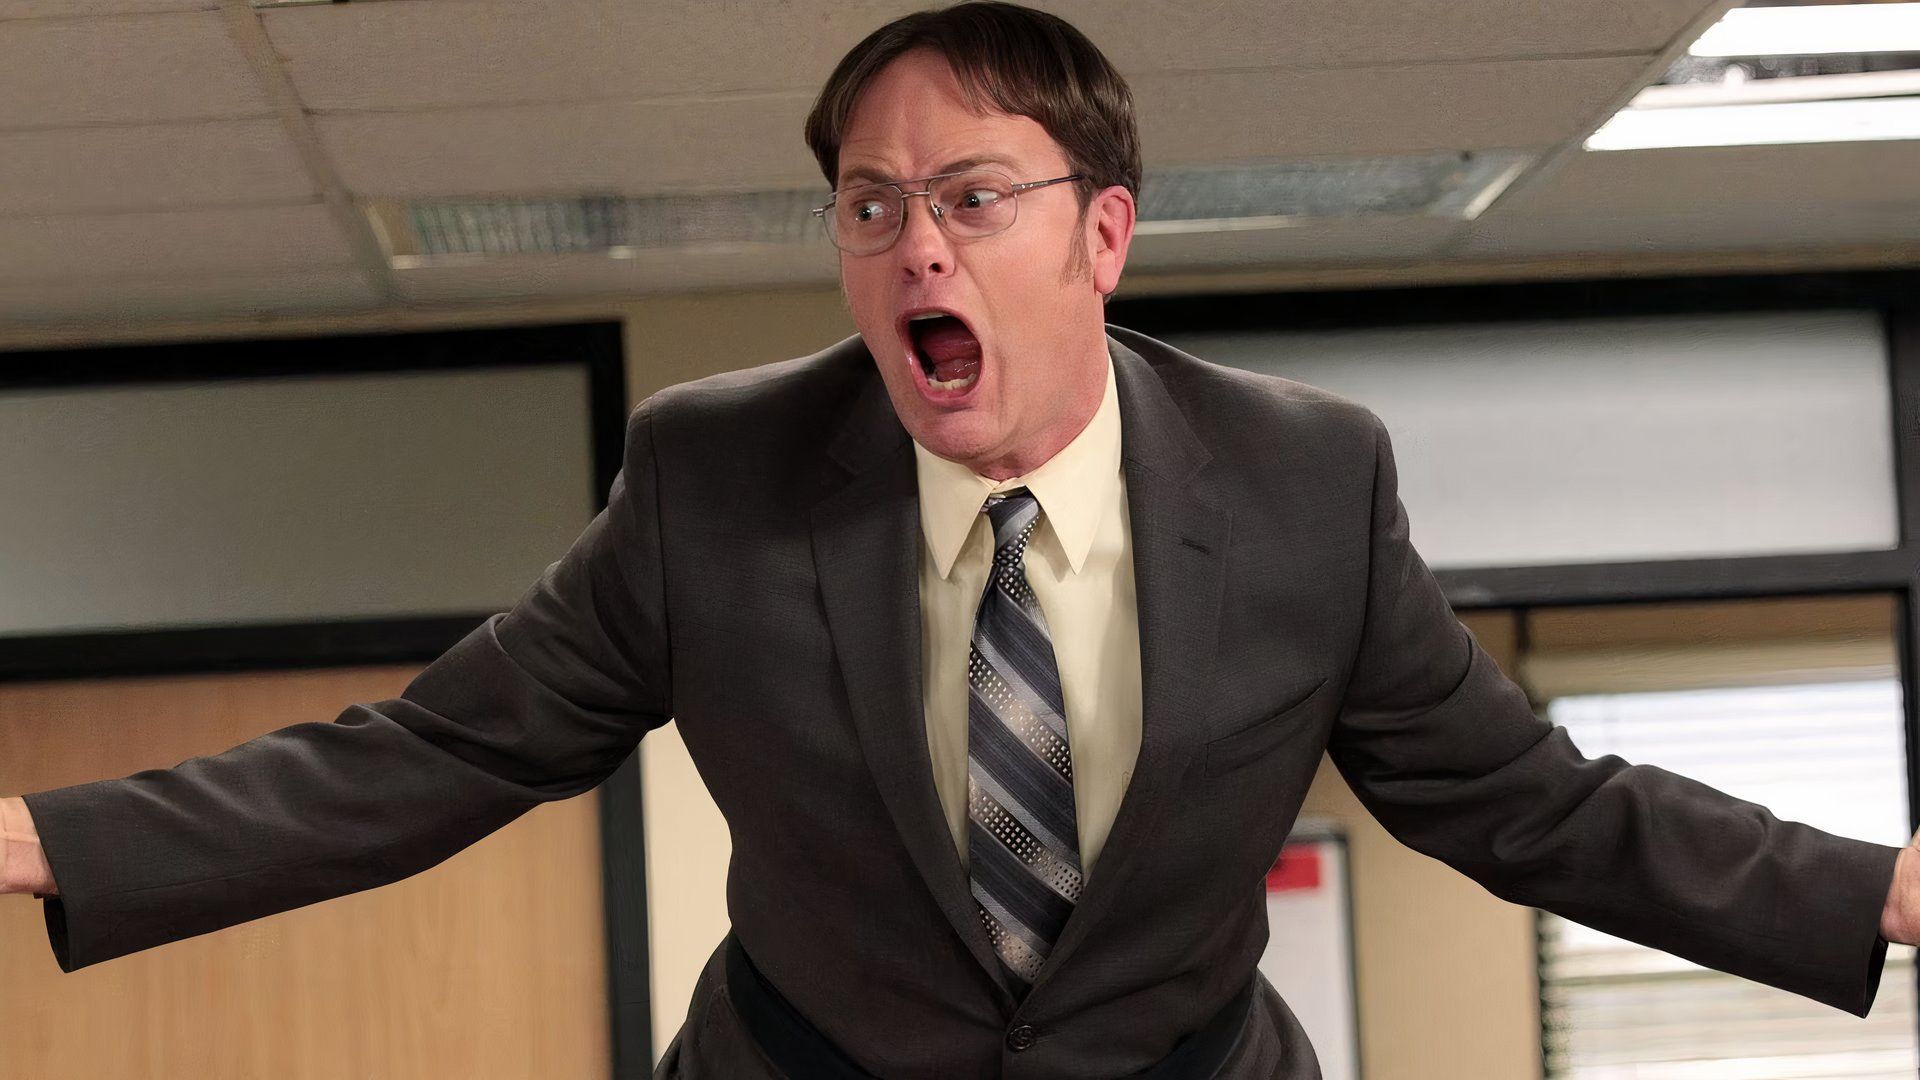 Rainn Wilson as Dwight Schrute in The Office